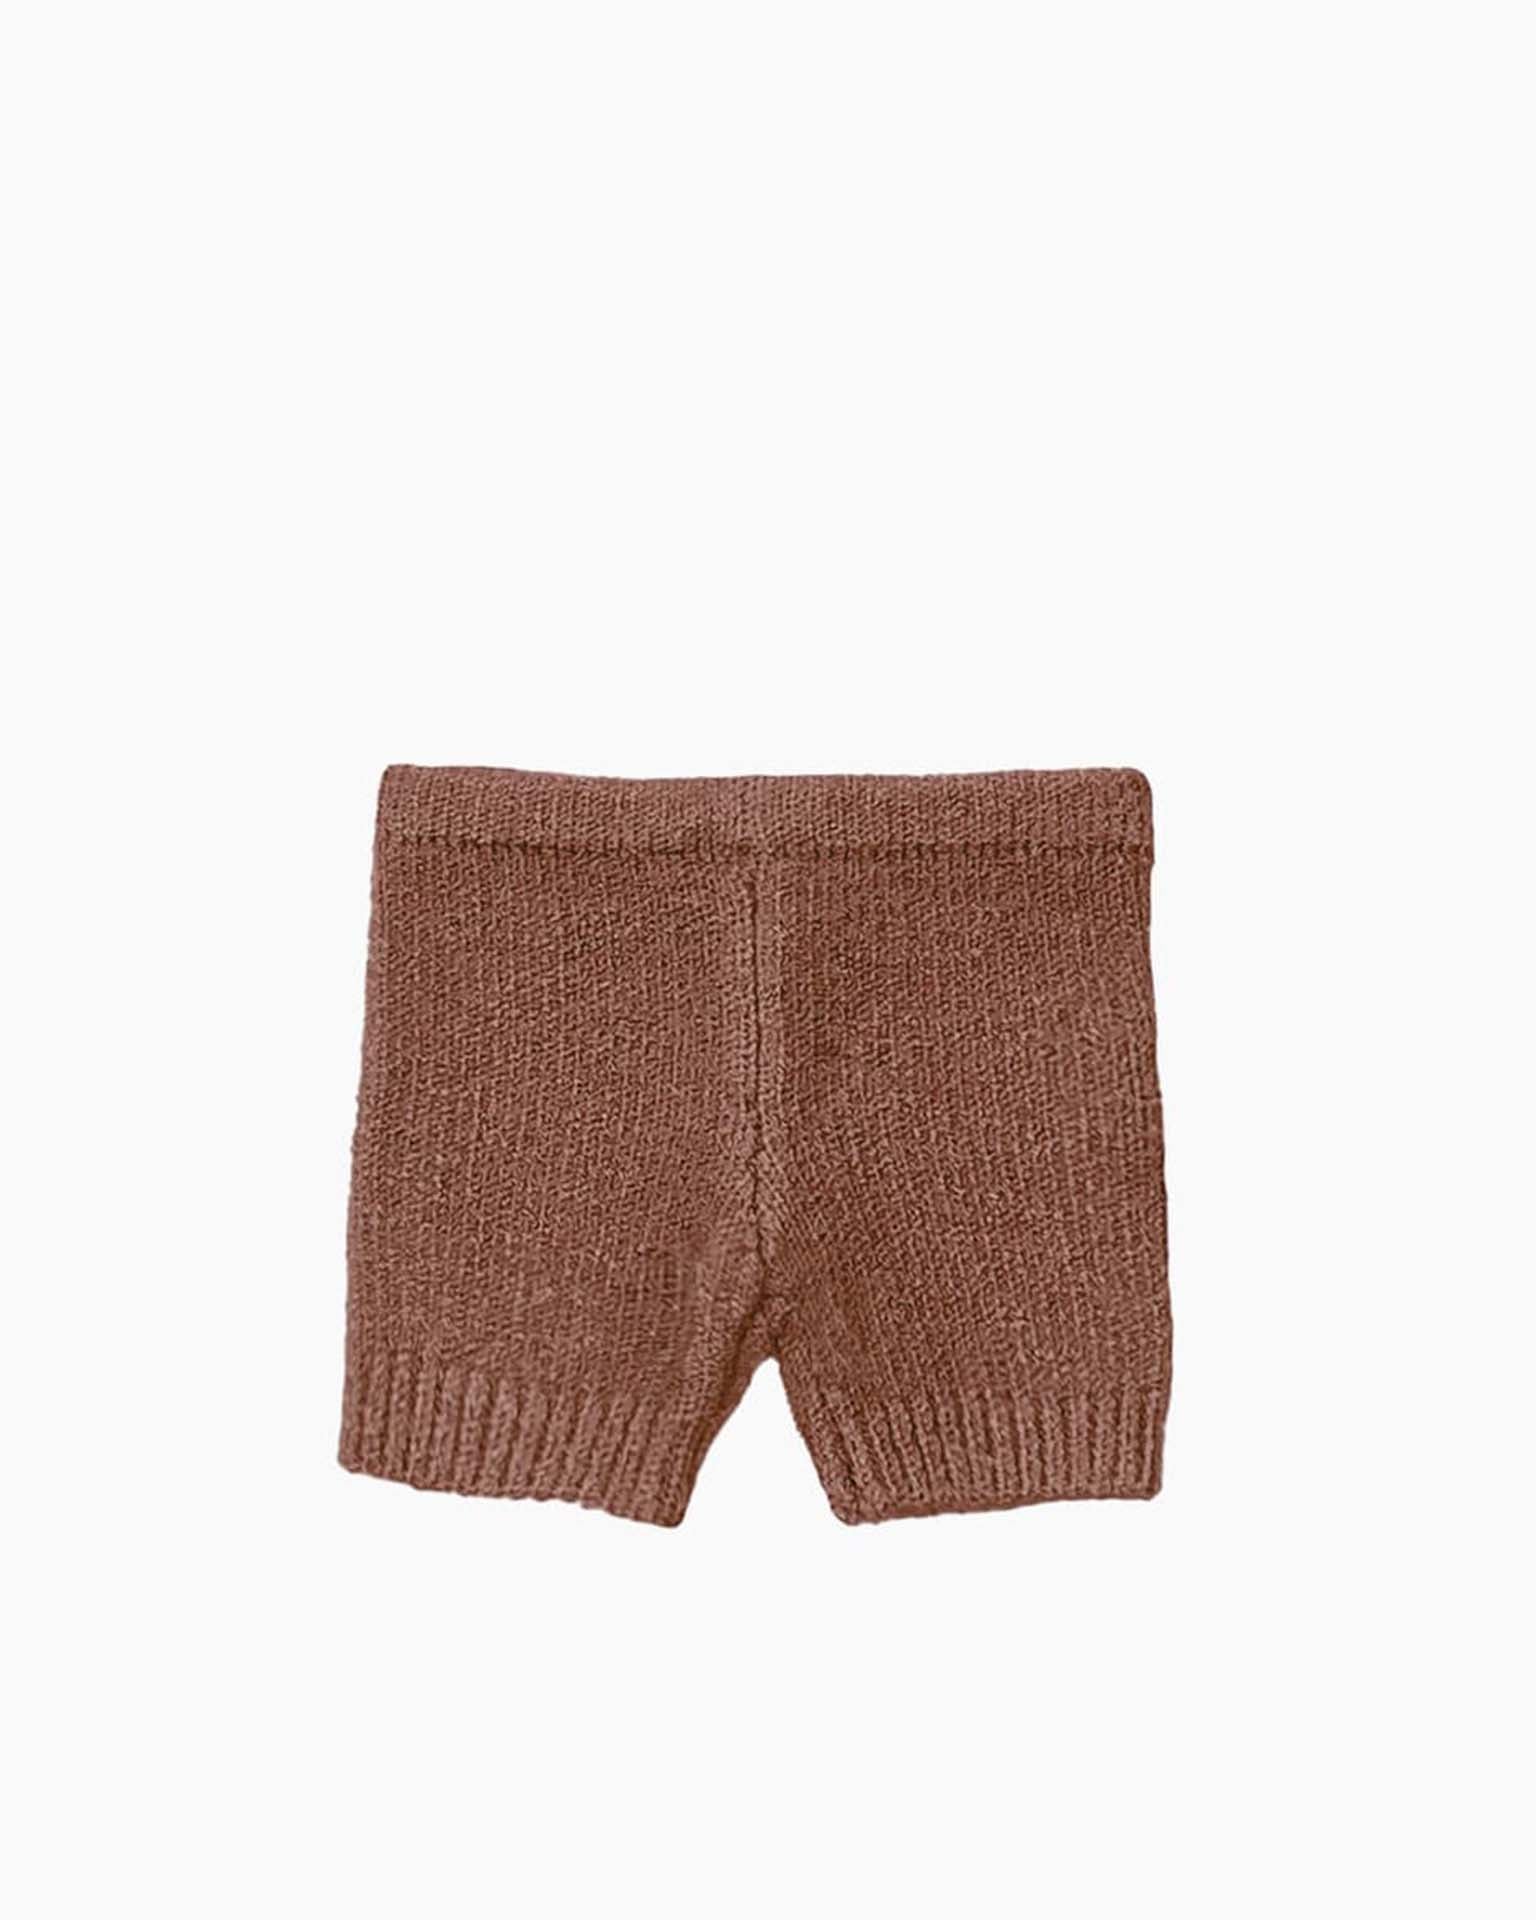 vito knit shorts in caramel